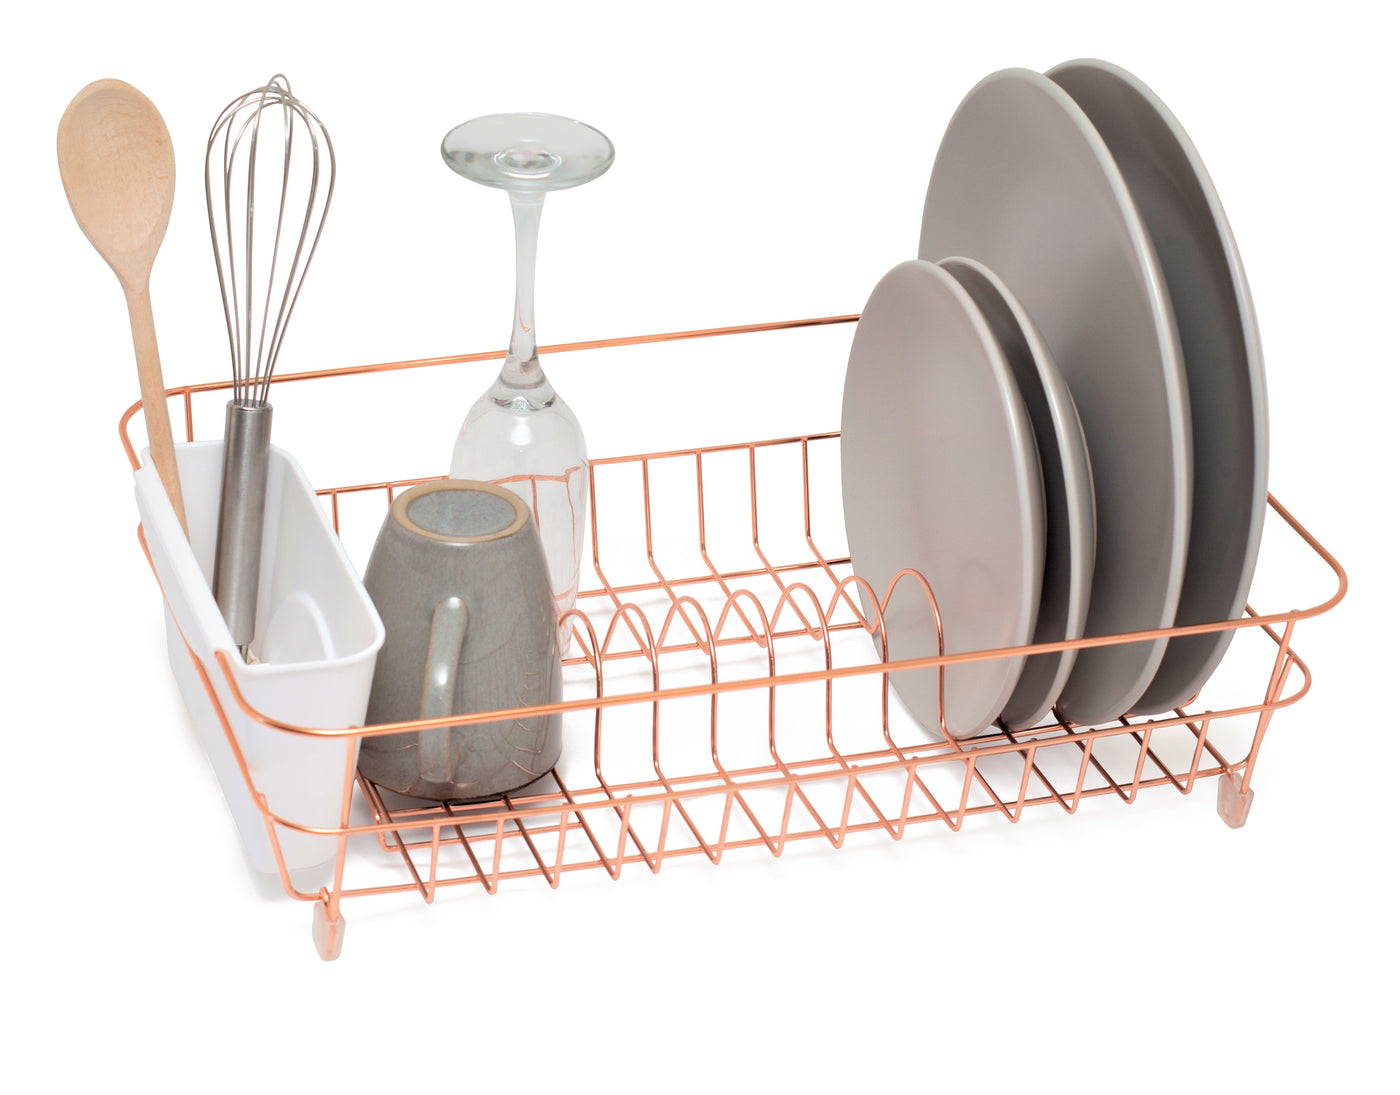 Dish Drainer - Anti Rust Drying Rack – White Cutlery Basket